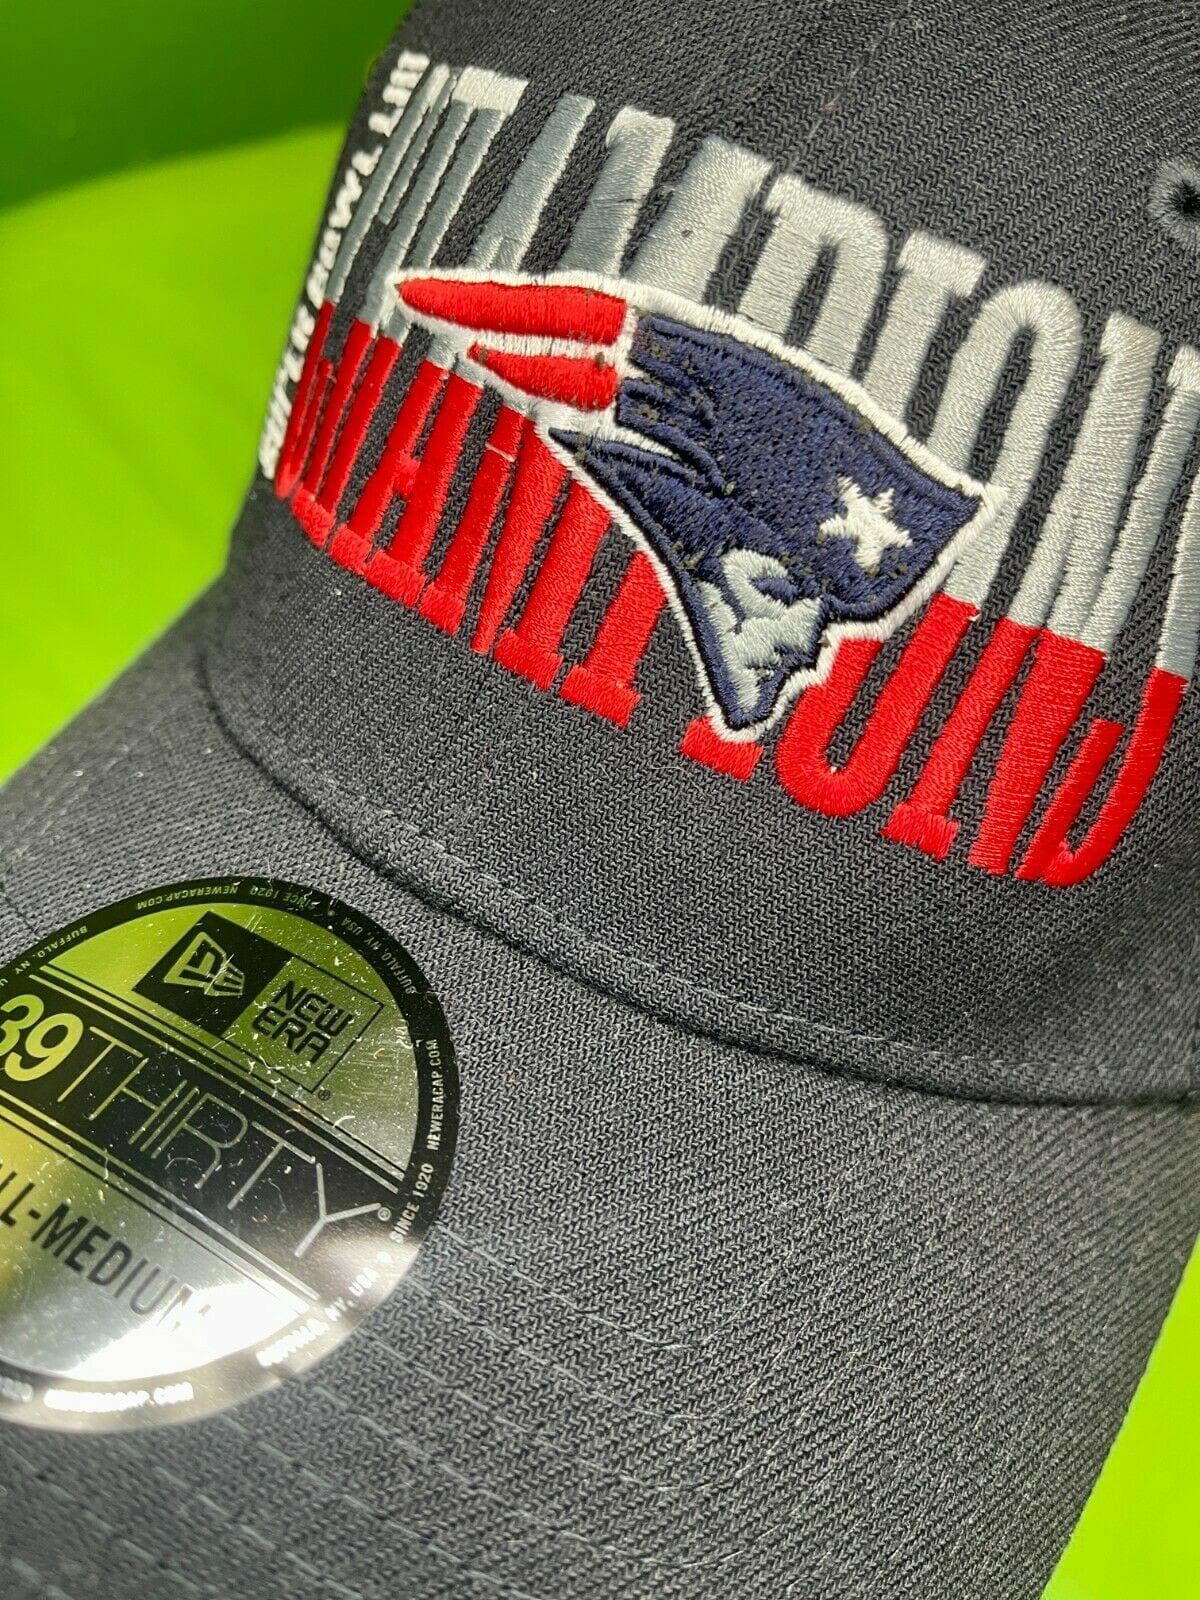 NFL New England Patriots Super Bowl LIII Champions New Era 39THIRTY Cap/Hat S-M